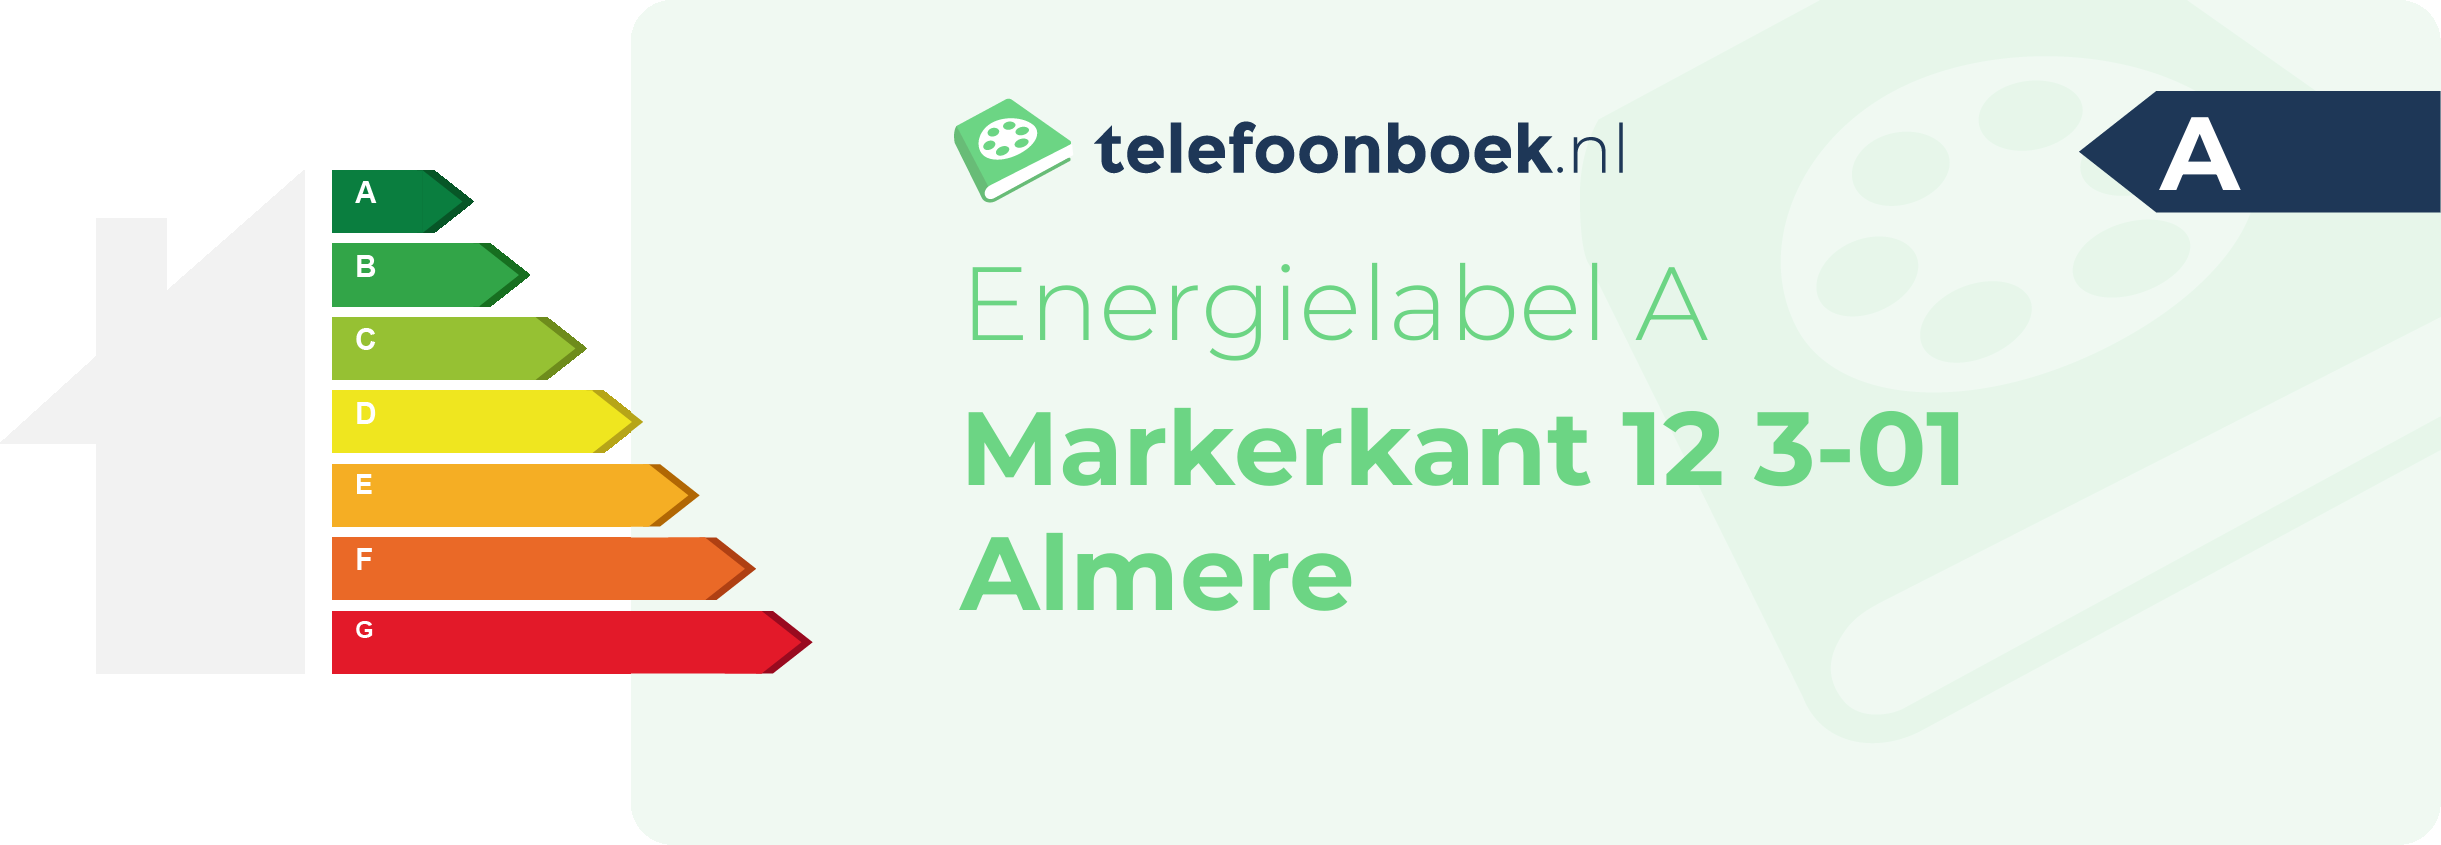 Energielabel Markerkant 12 3-01 Almere